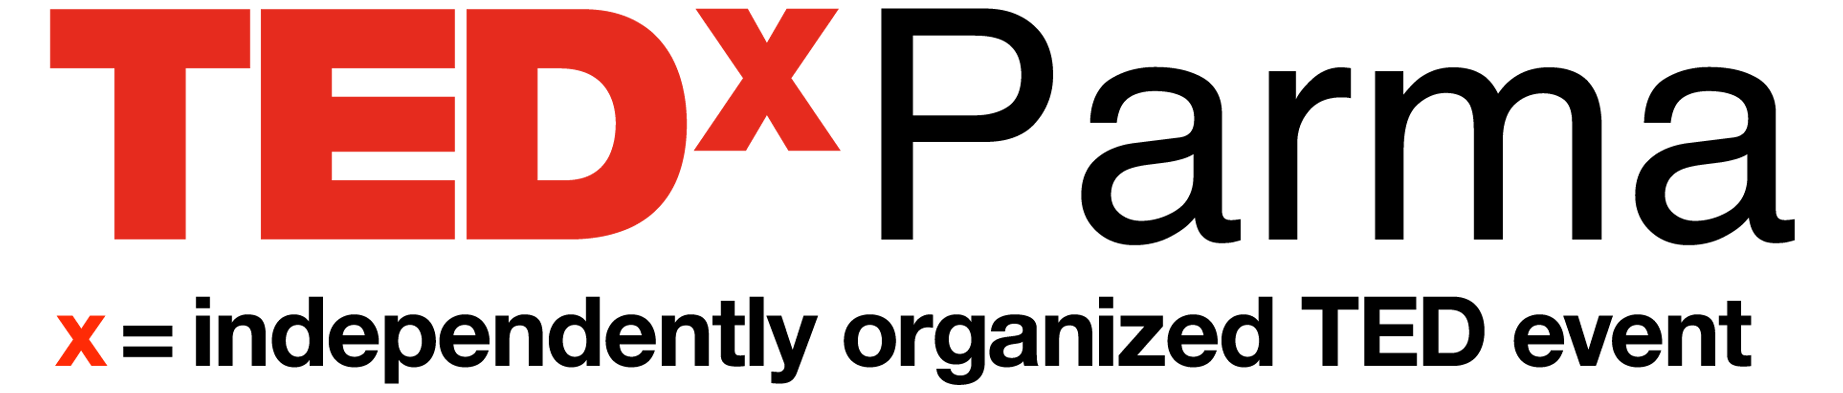 TEDxParma-logo-mobile